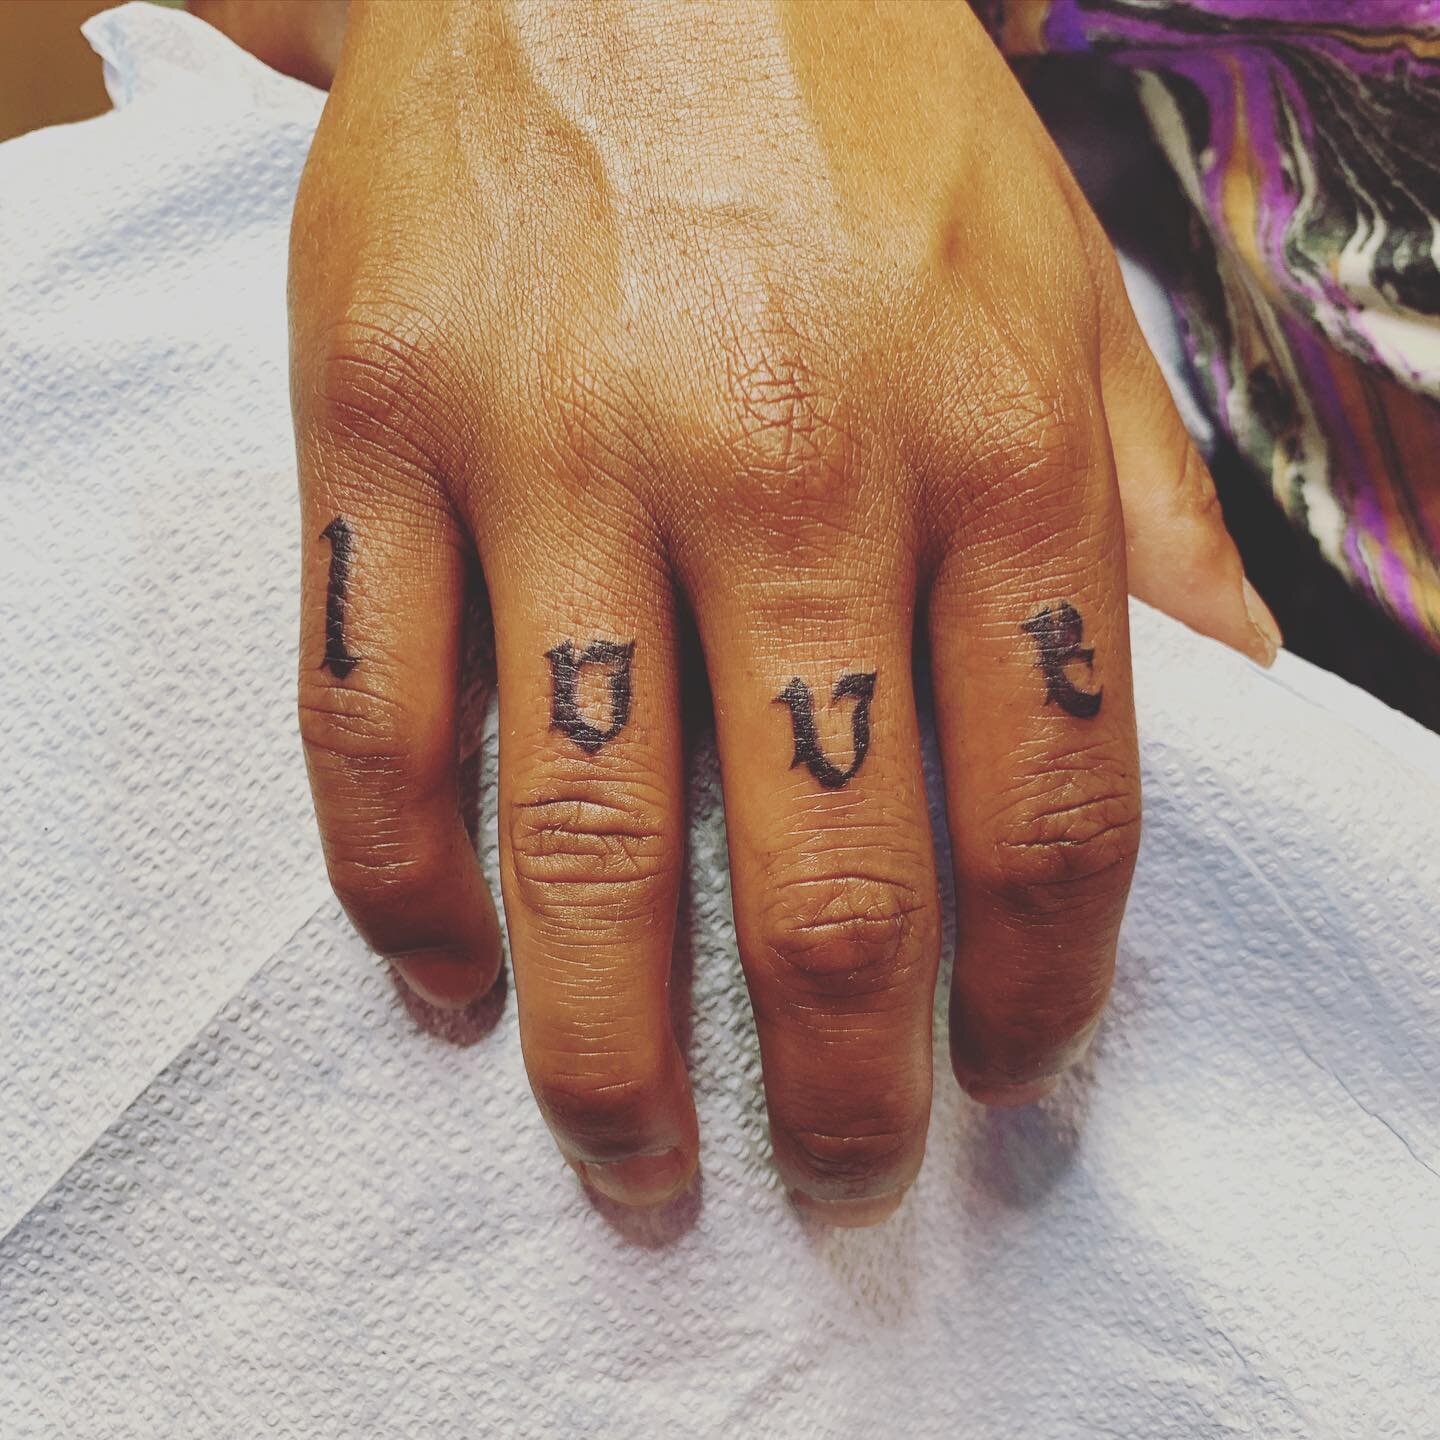 Love this hand tat! ❤️